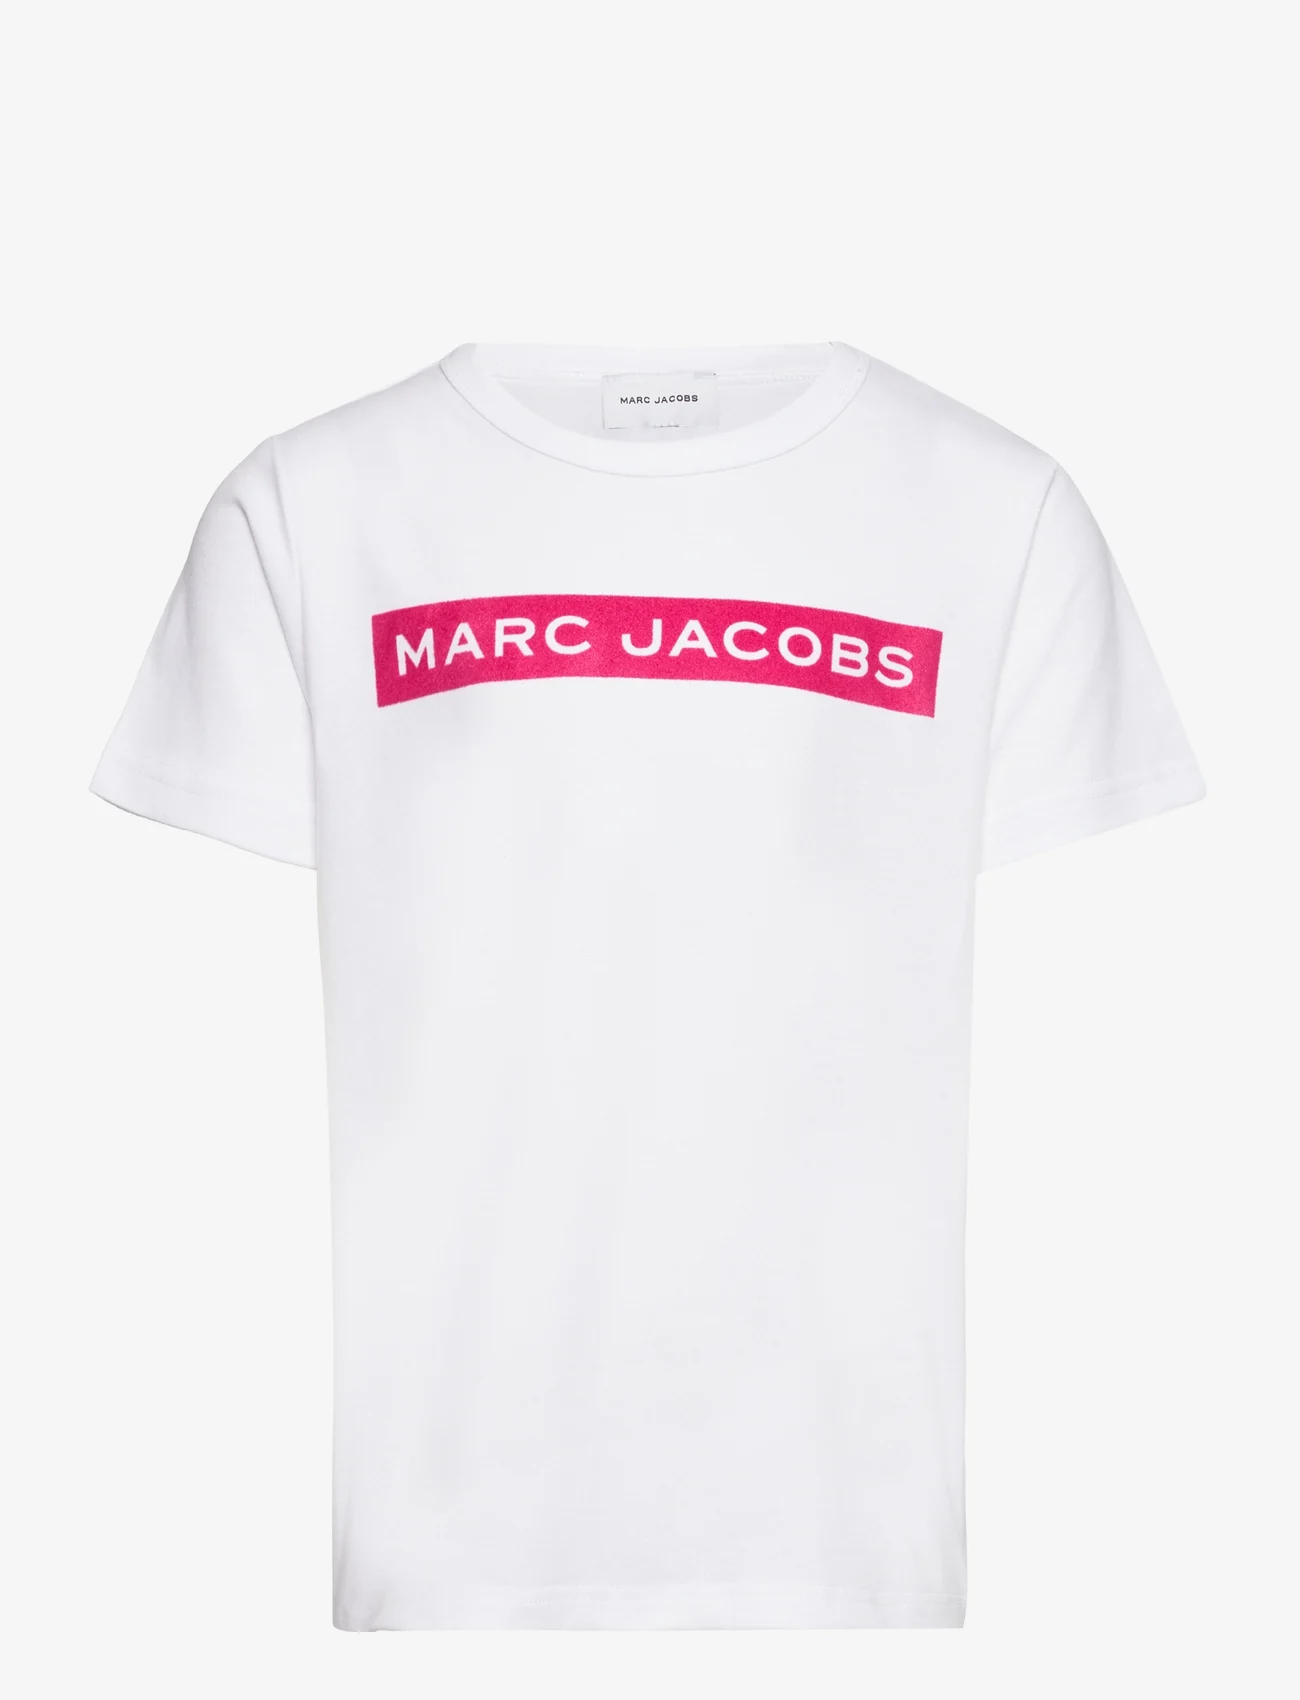 Little Marc Jacobs - SHORT SLEEVES TEE-SHIRT - kortärmade t-shirts - white - 0